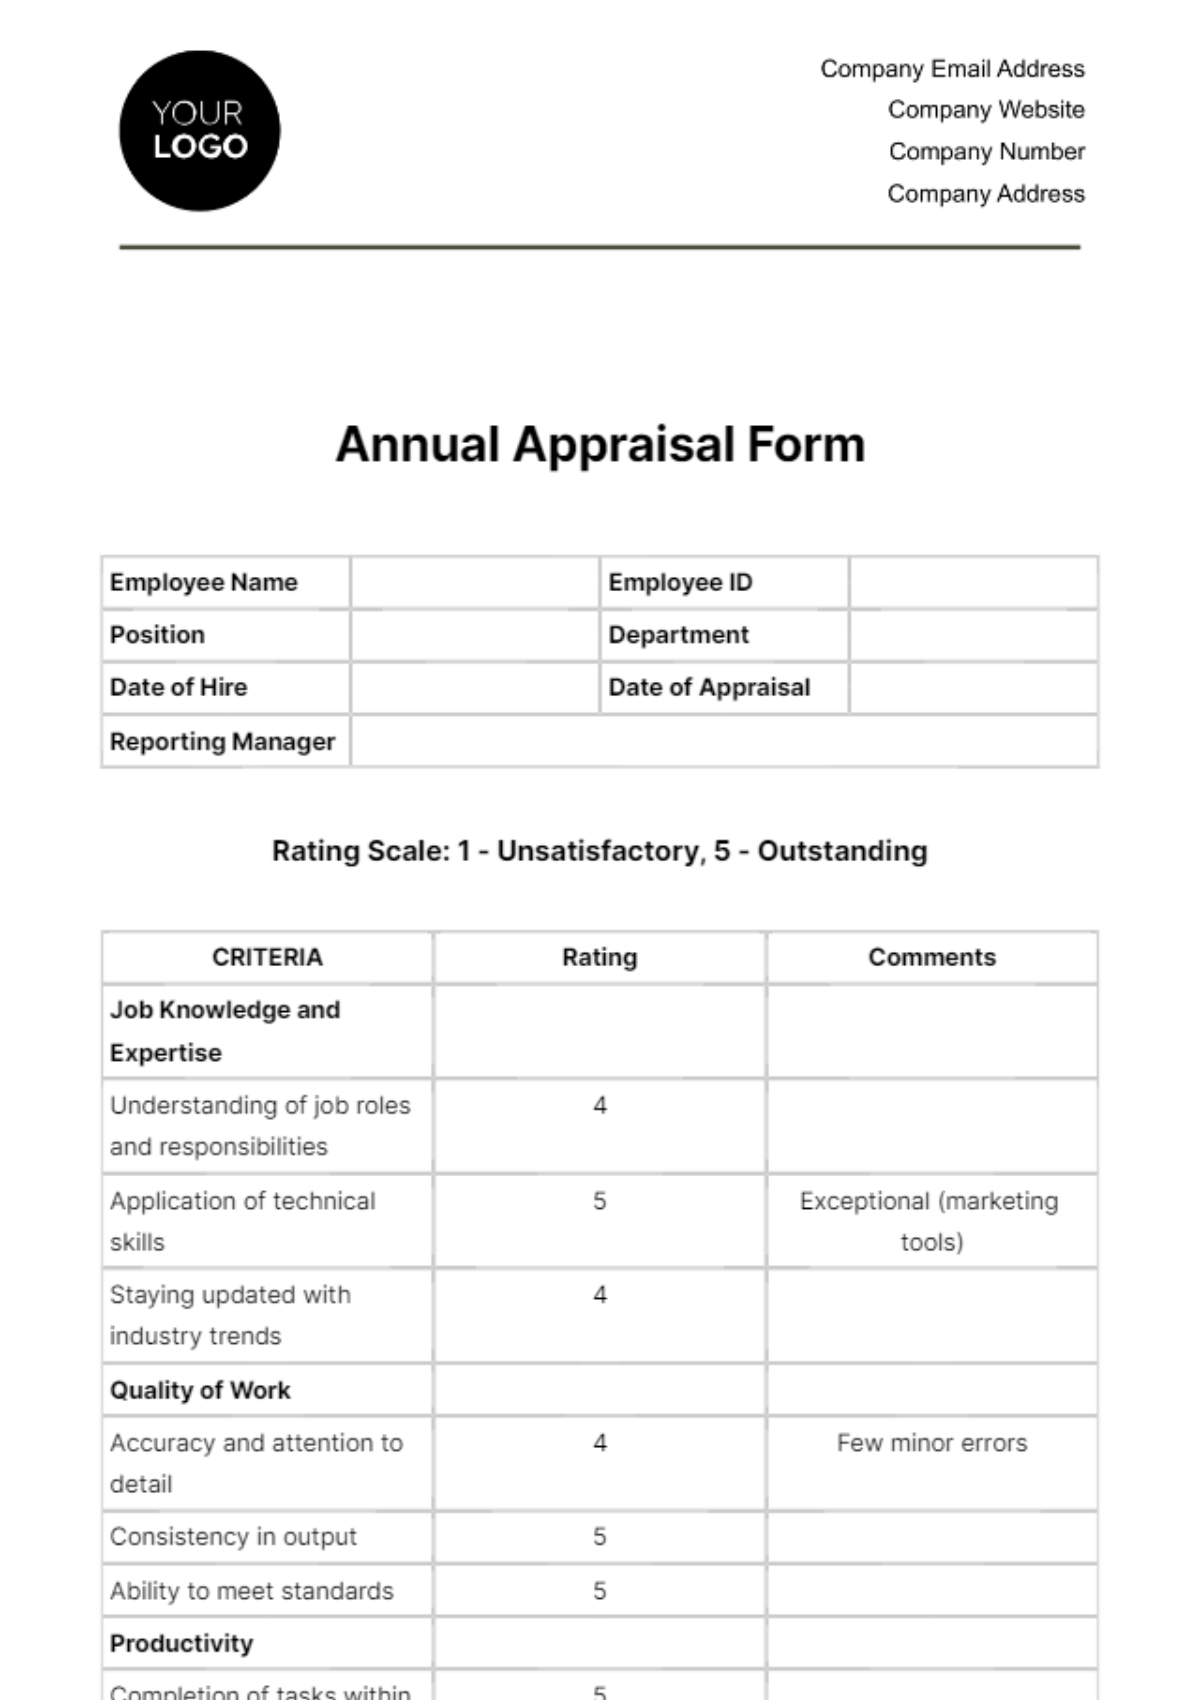 Free Annual Appraisal Form HR Template